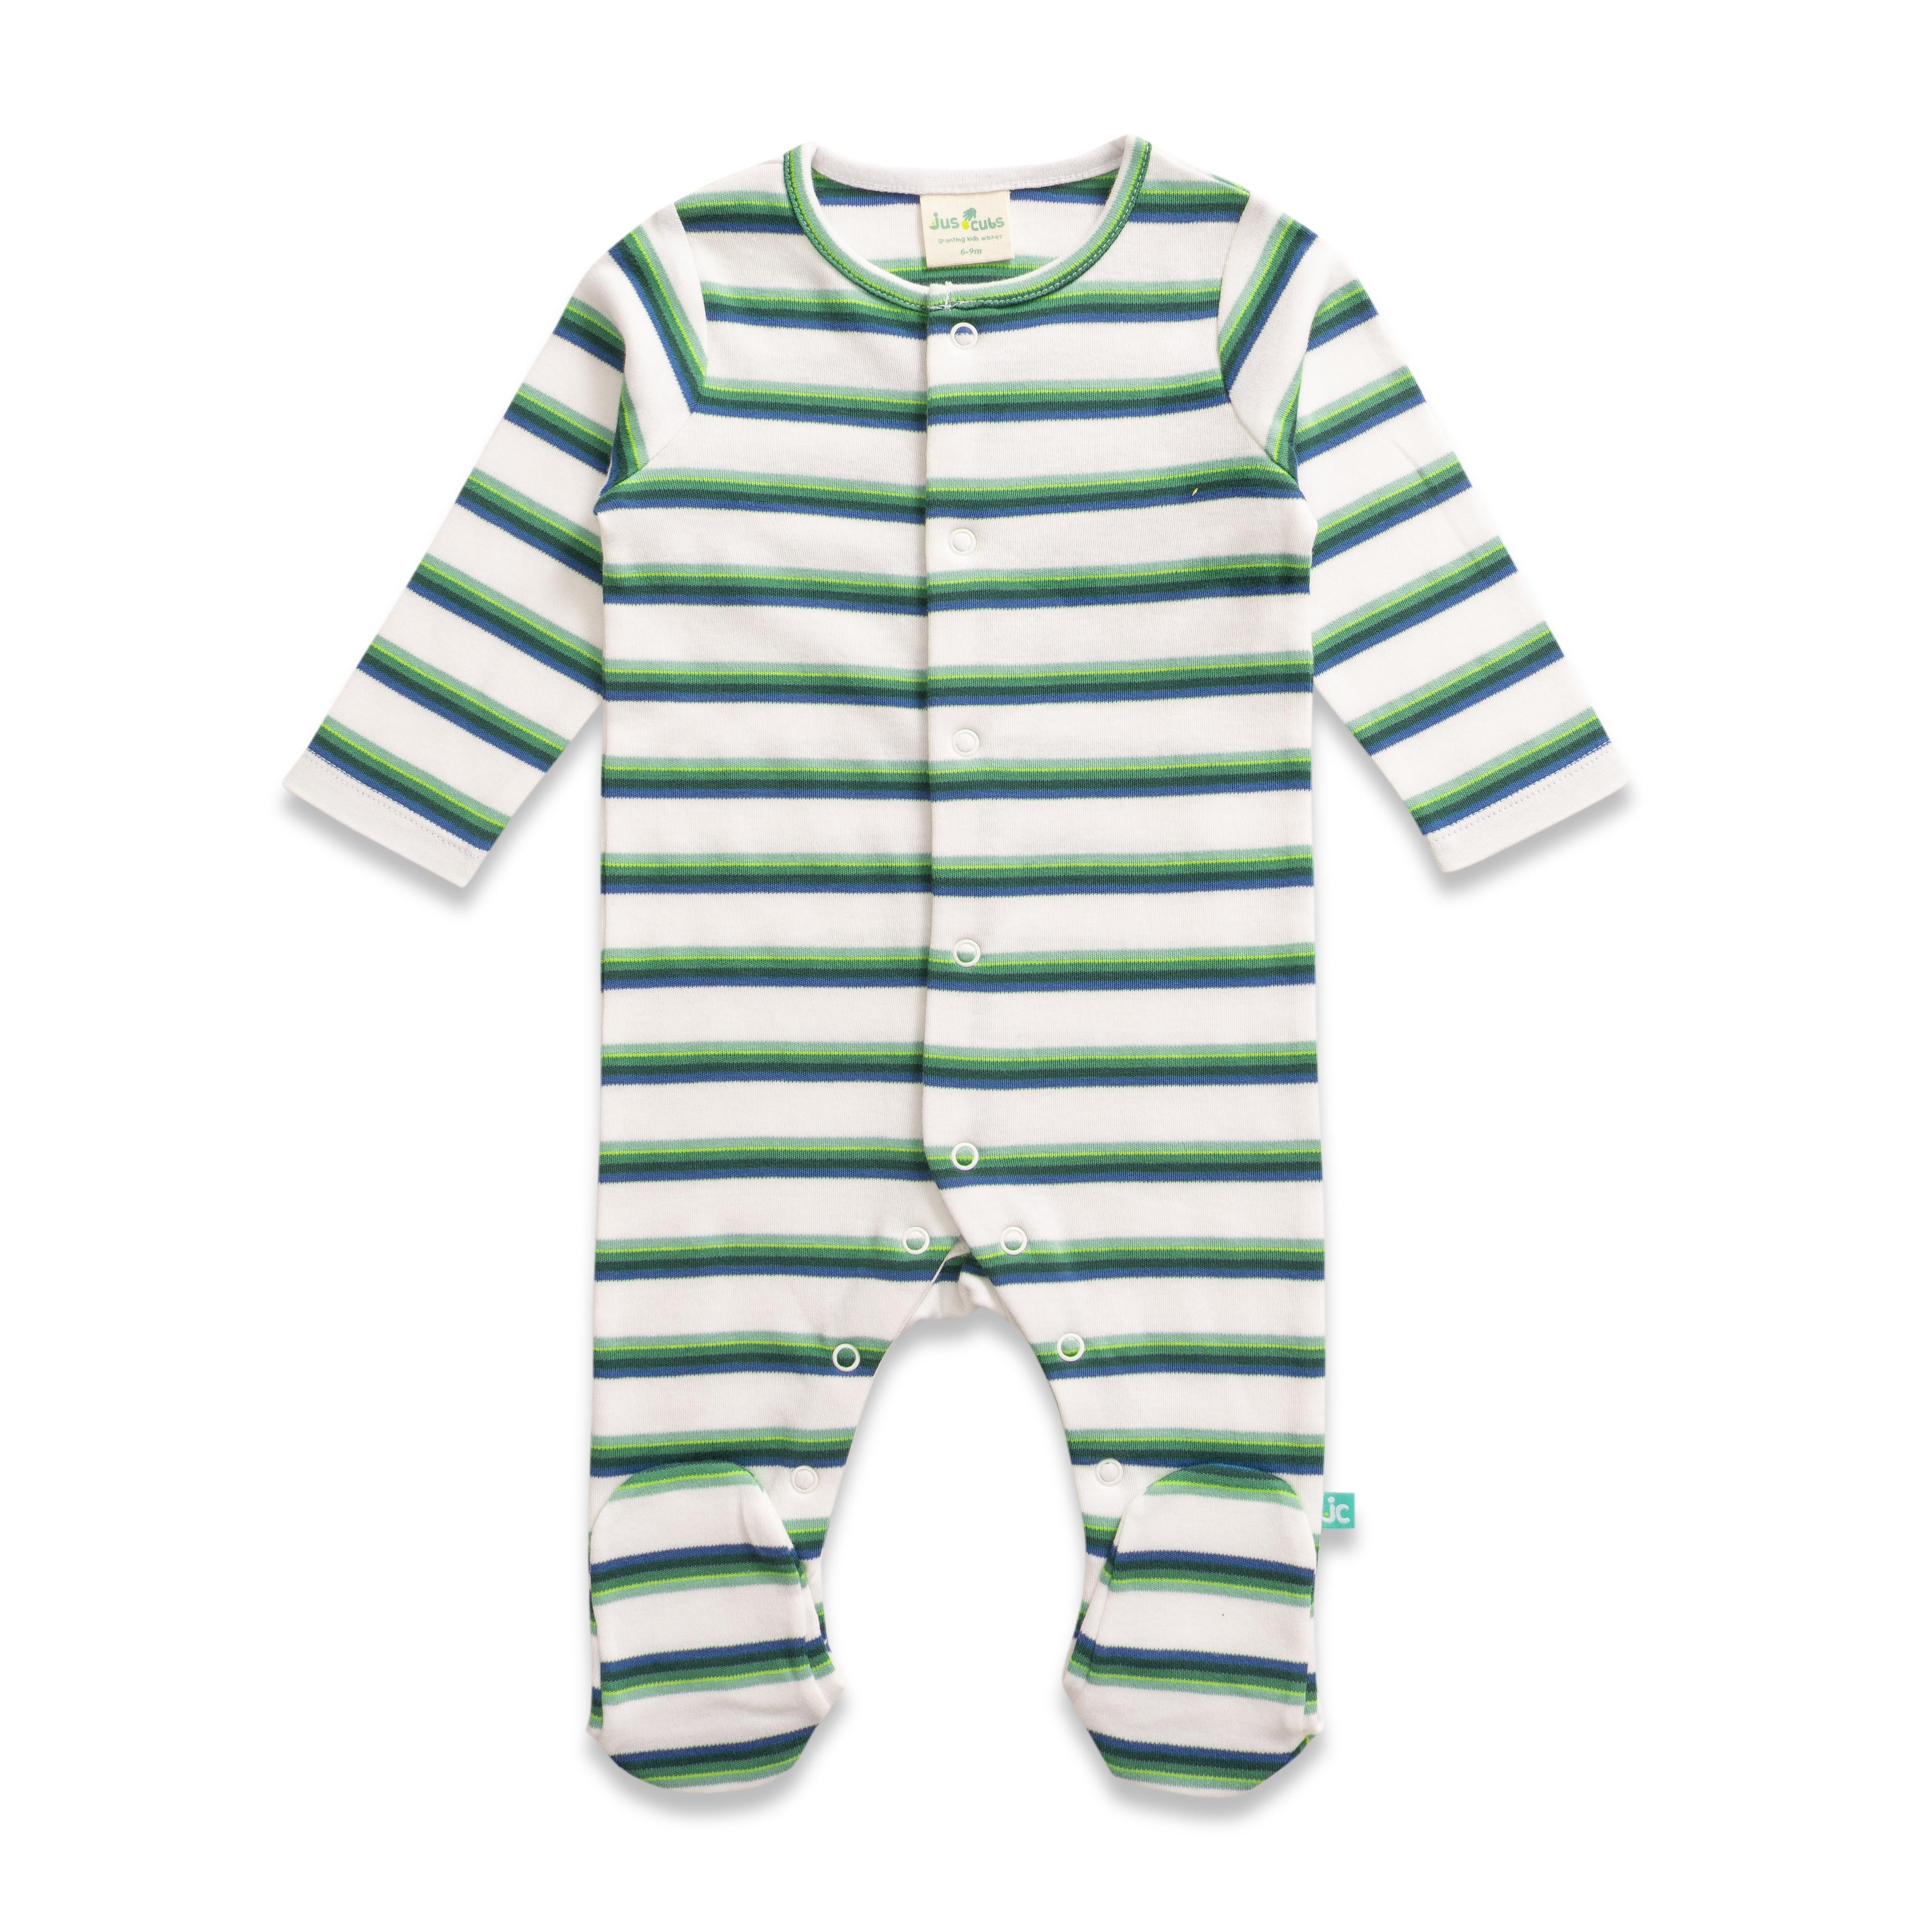 Baby Boys Striped Sleepsuit